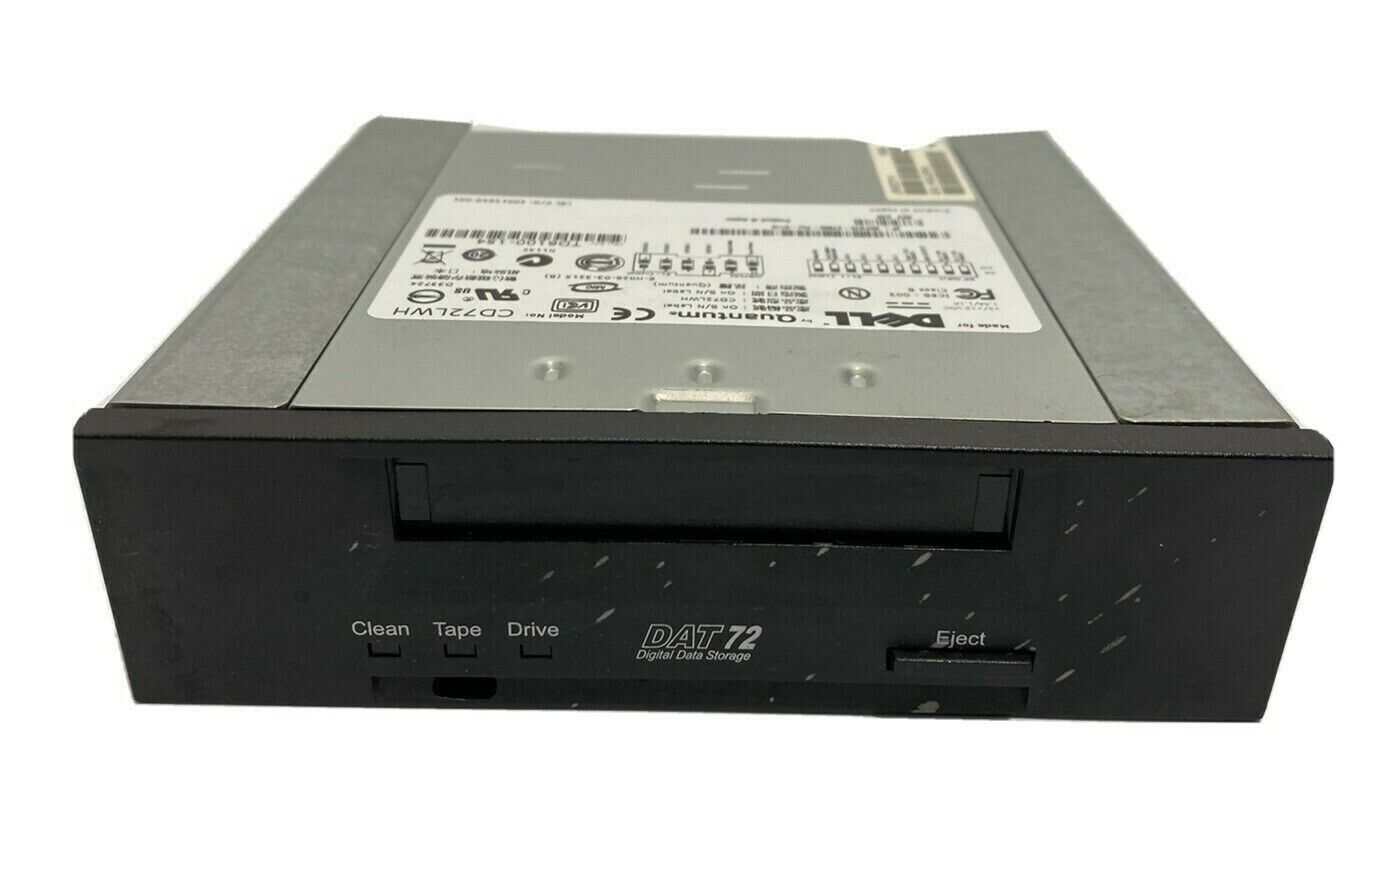 Dell Quantum CD72LWH Internal DAT72 SCSI Tape Drive FRU TD6100-154 - TESTED